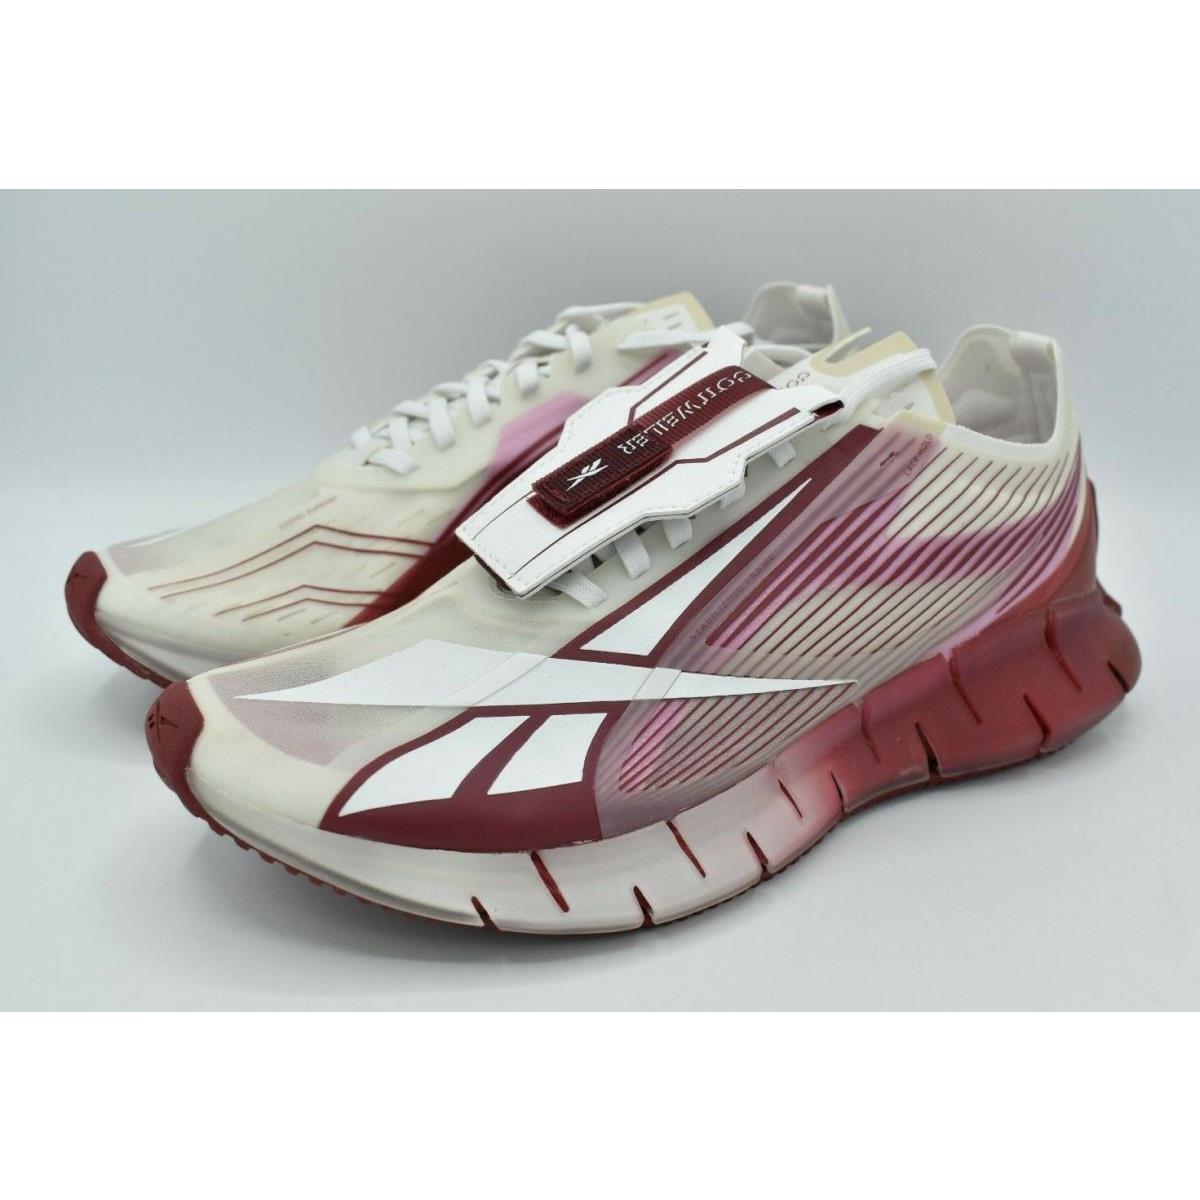 Reebok Men Size 7 Cottweiler Zig 3D Storm White Red Stucco Running Shoes Sneaker